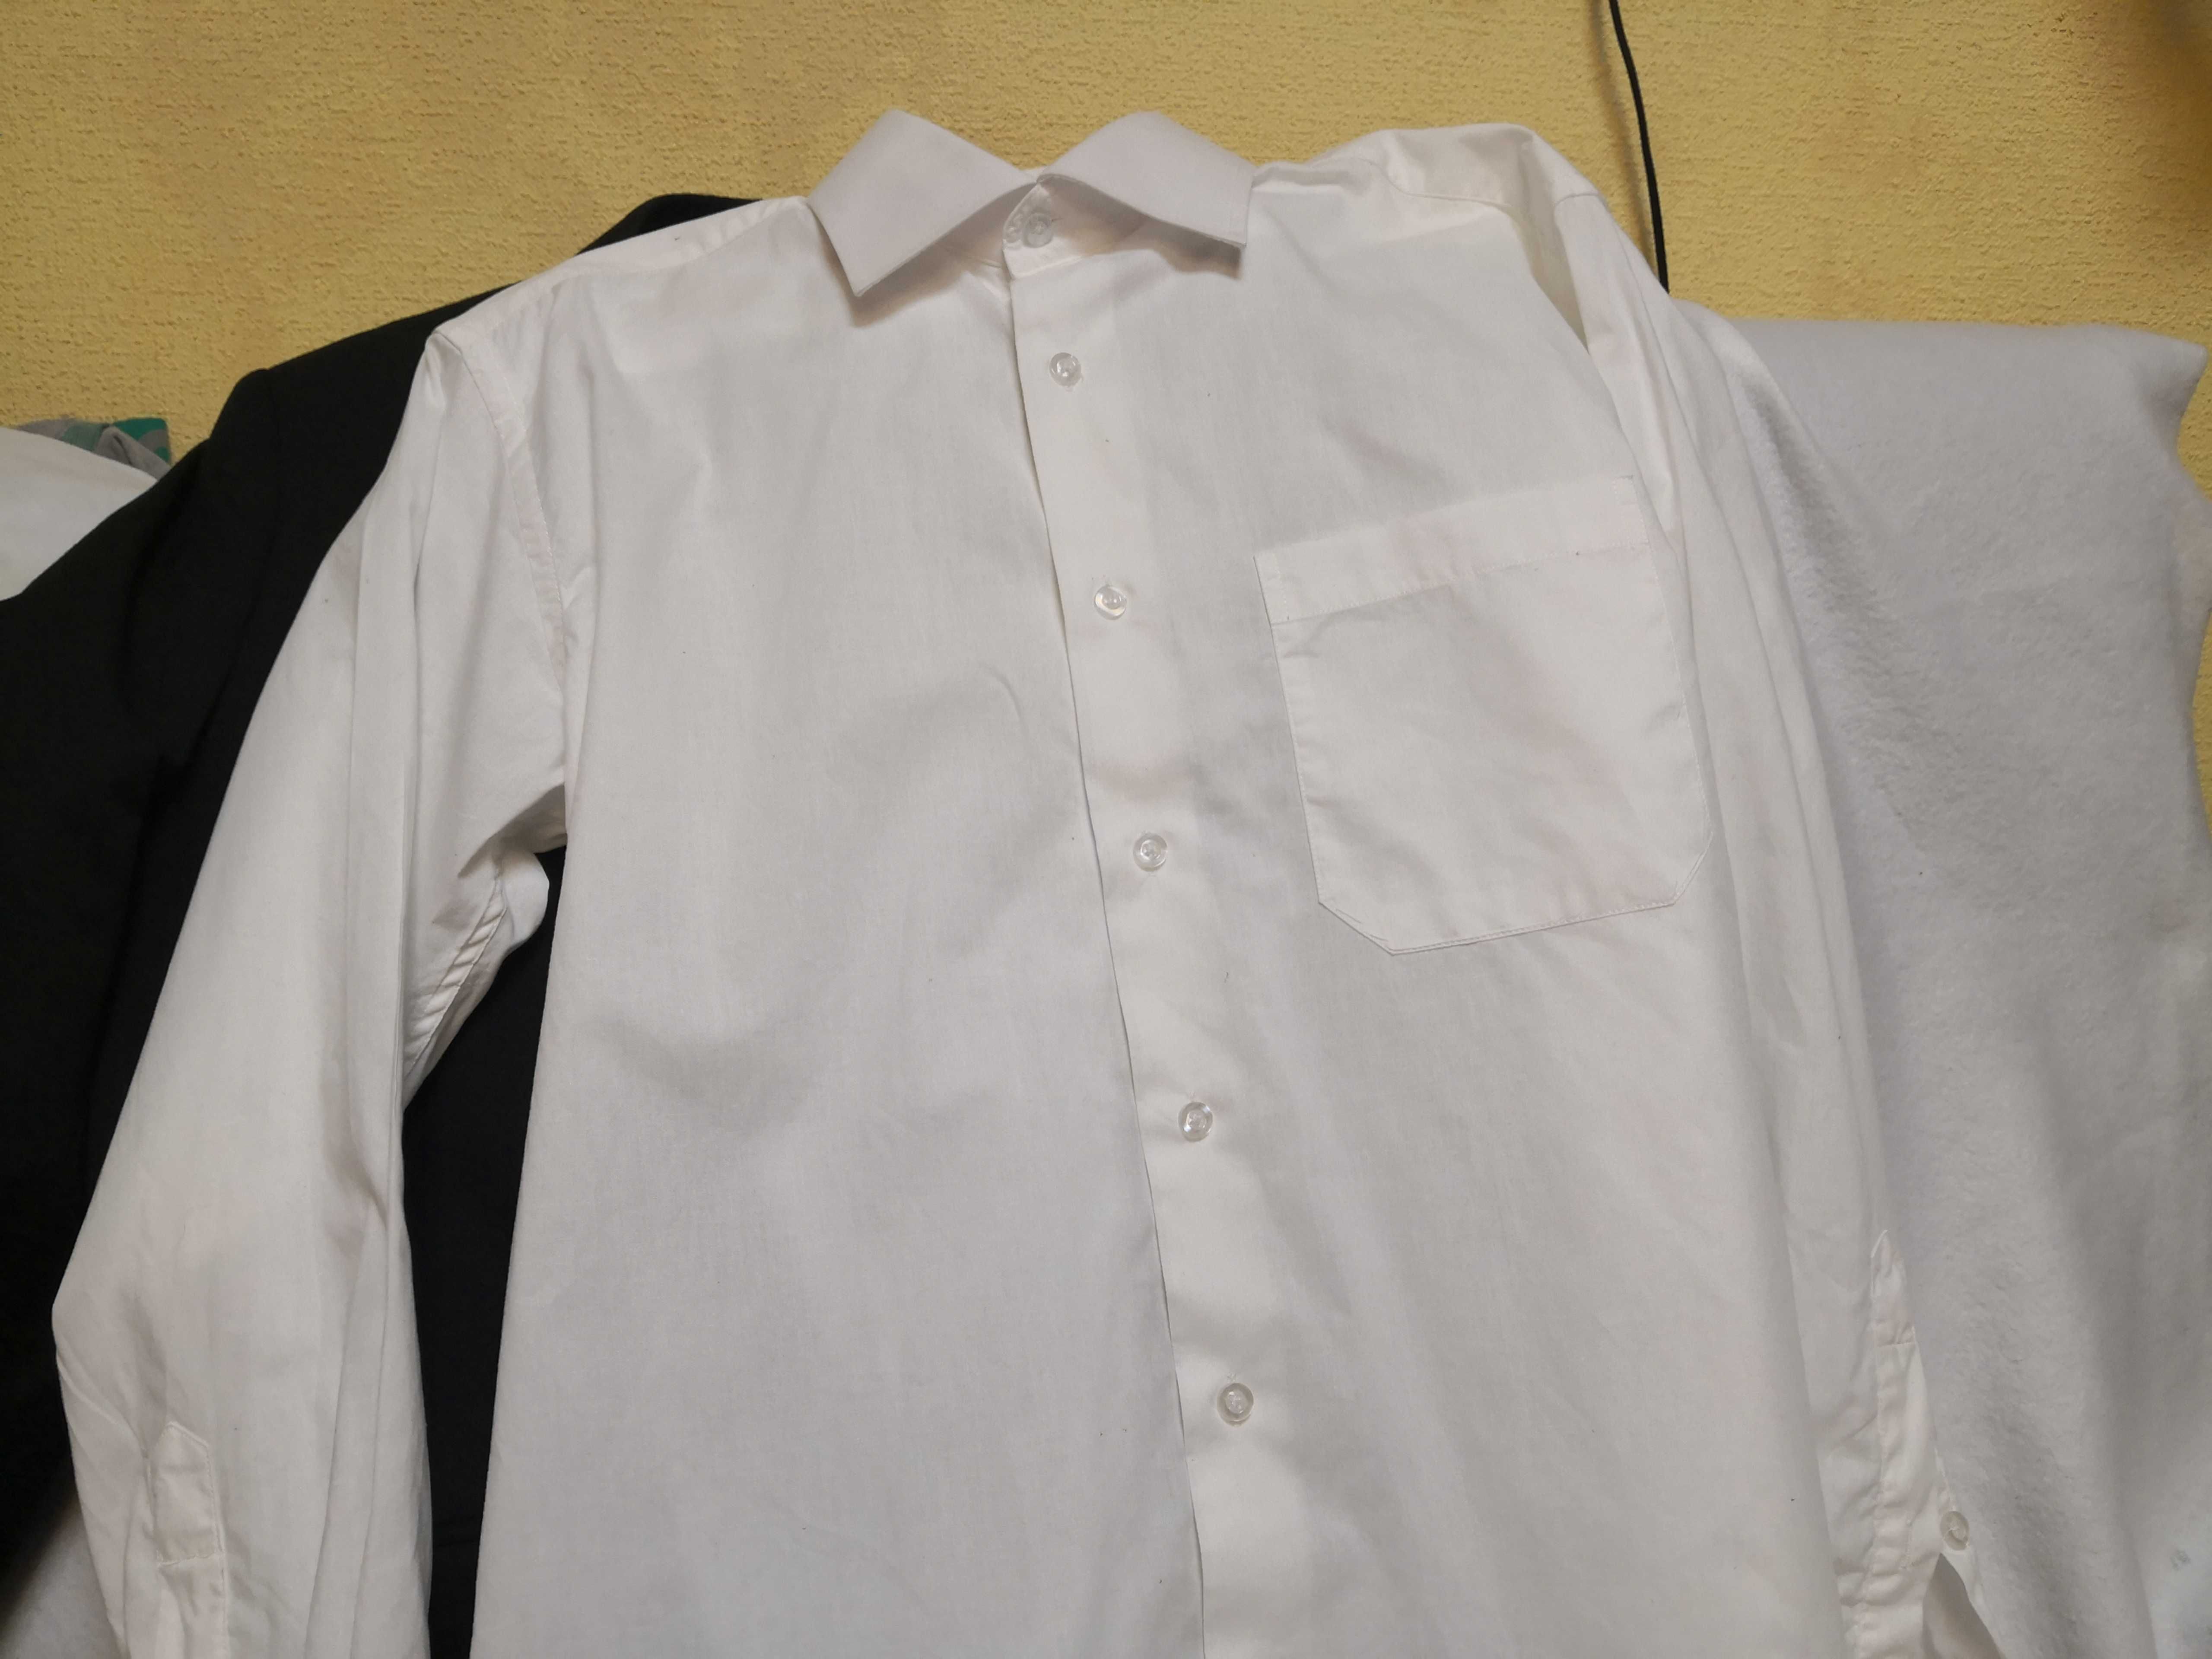 Marynarka H&M męska czarna rozmiar 52 - L - 180/104 + koszula